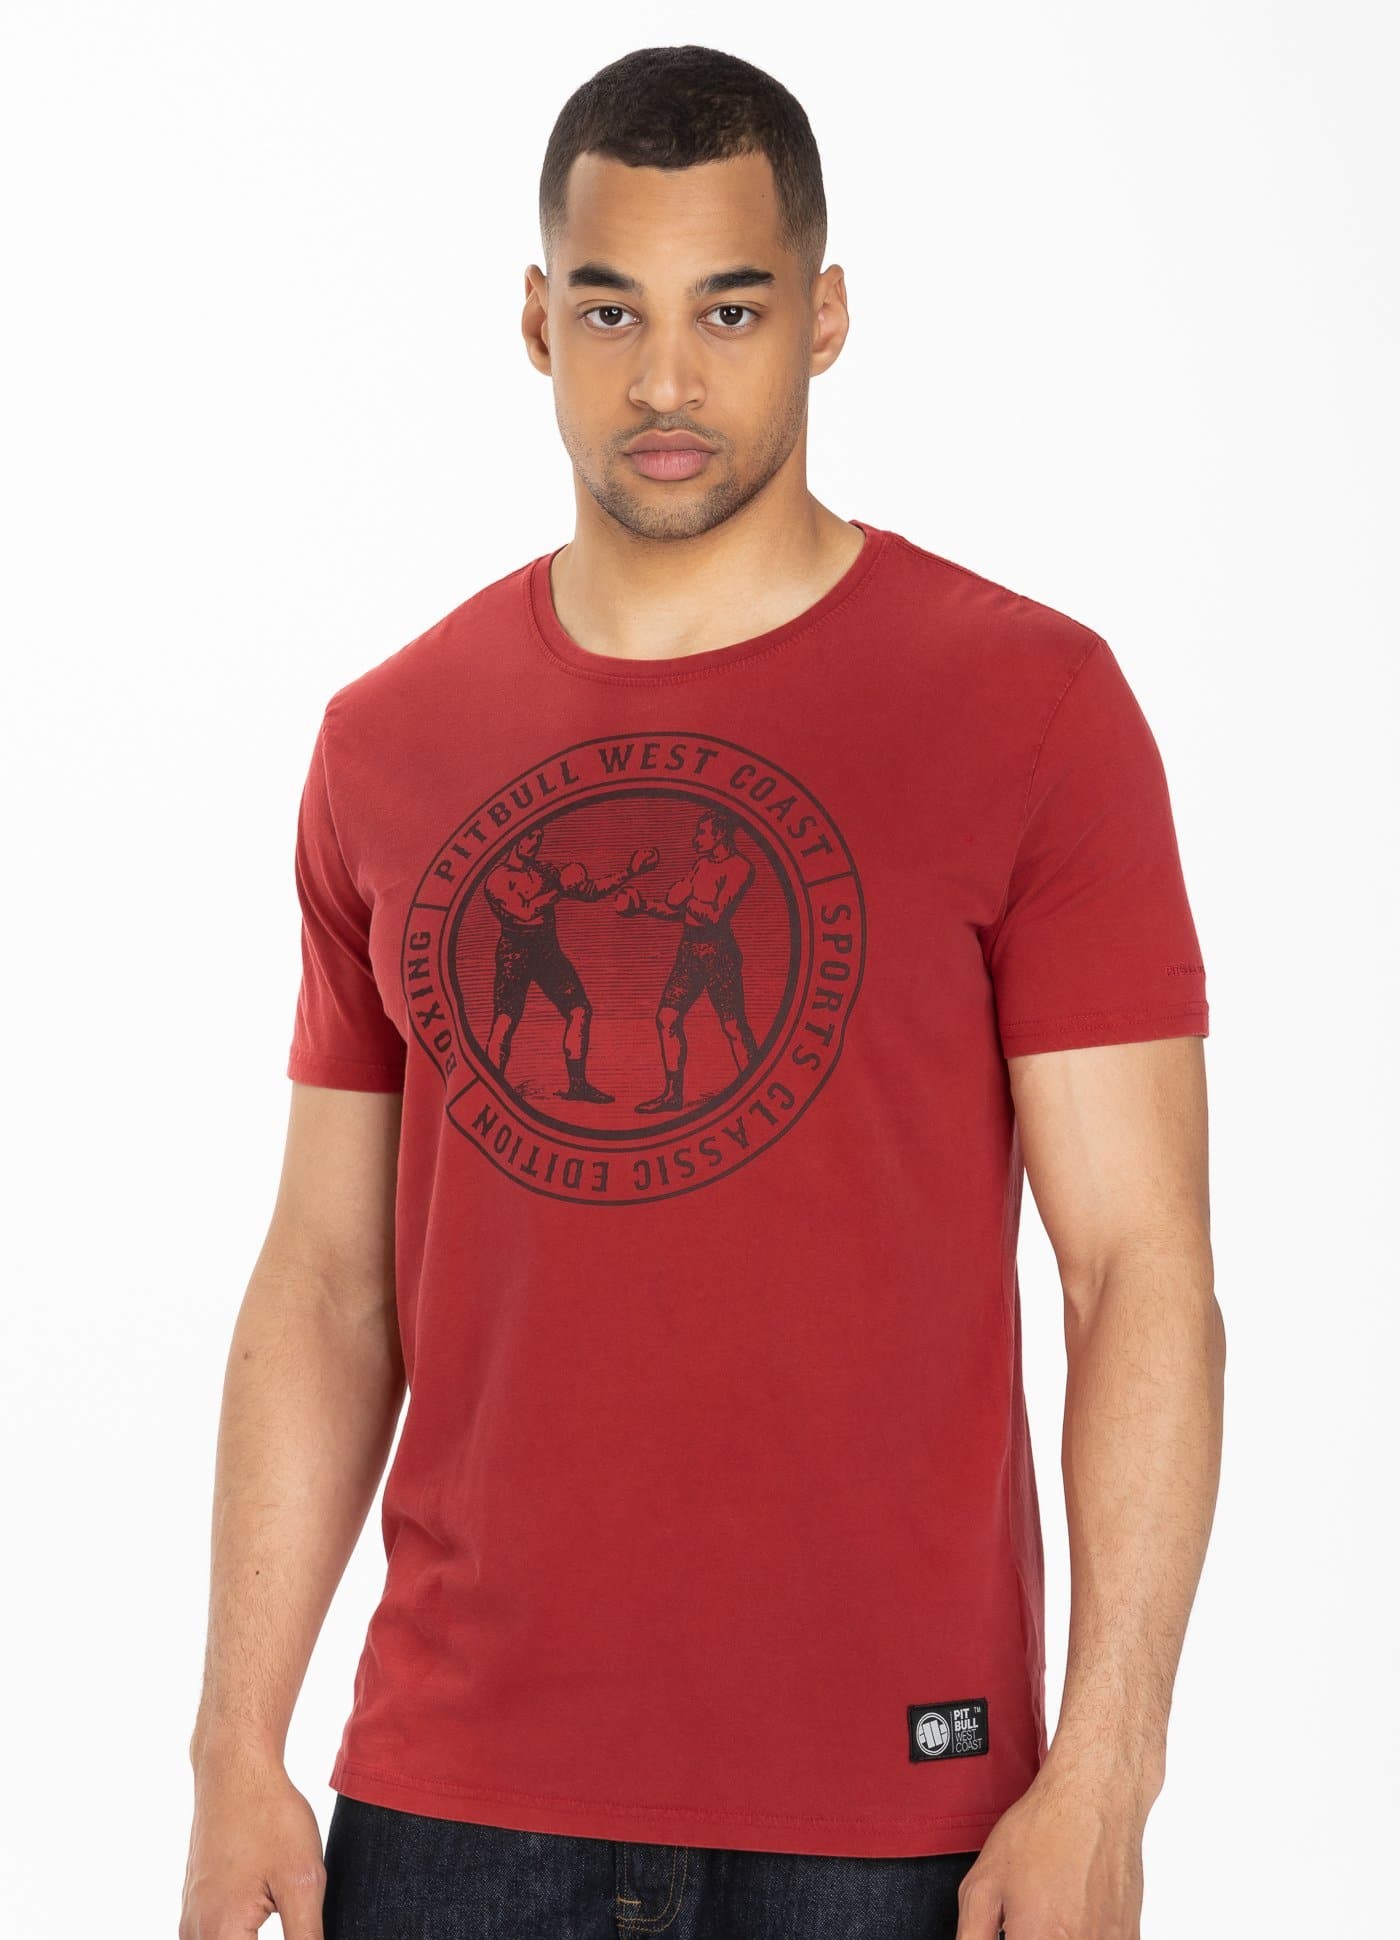 Pitbull West Coast - T-Shirt Vintage Boxing